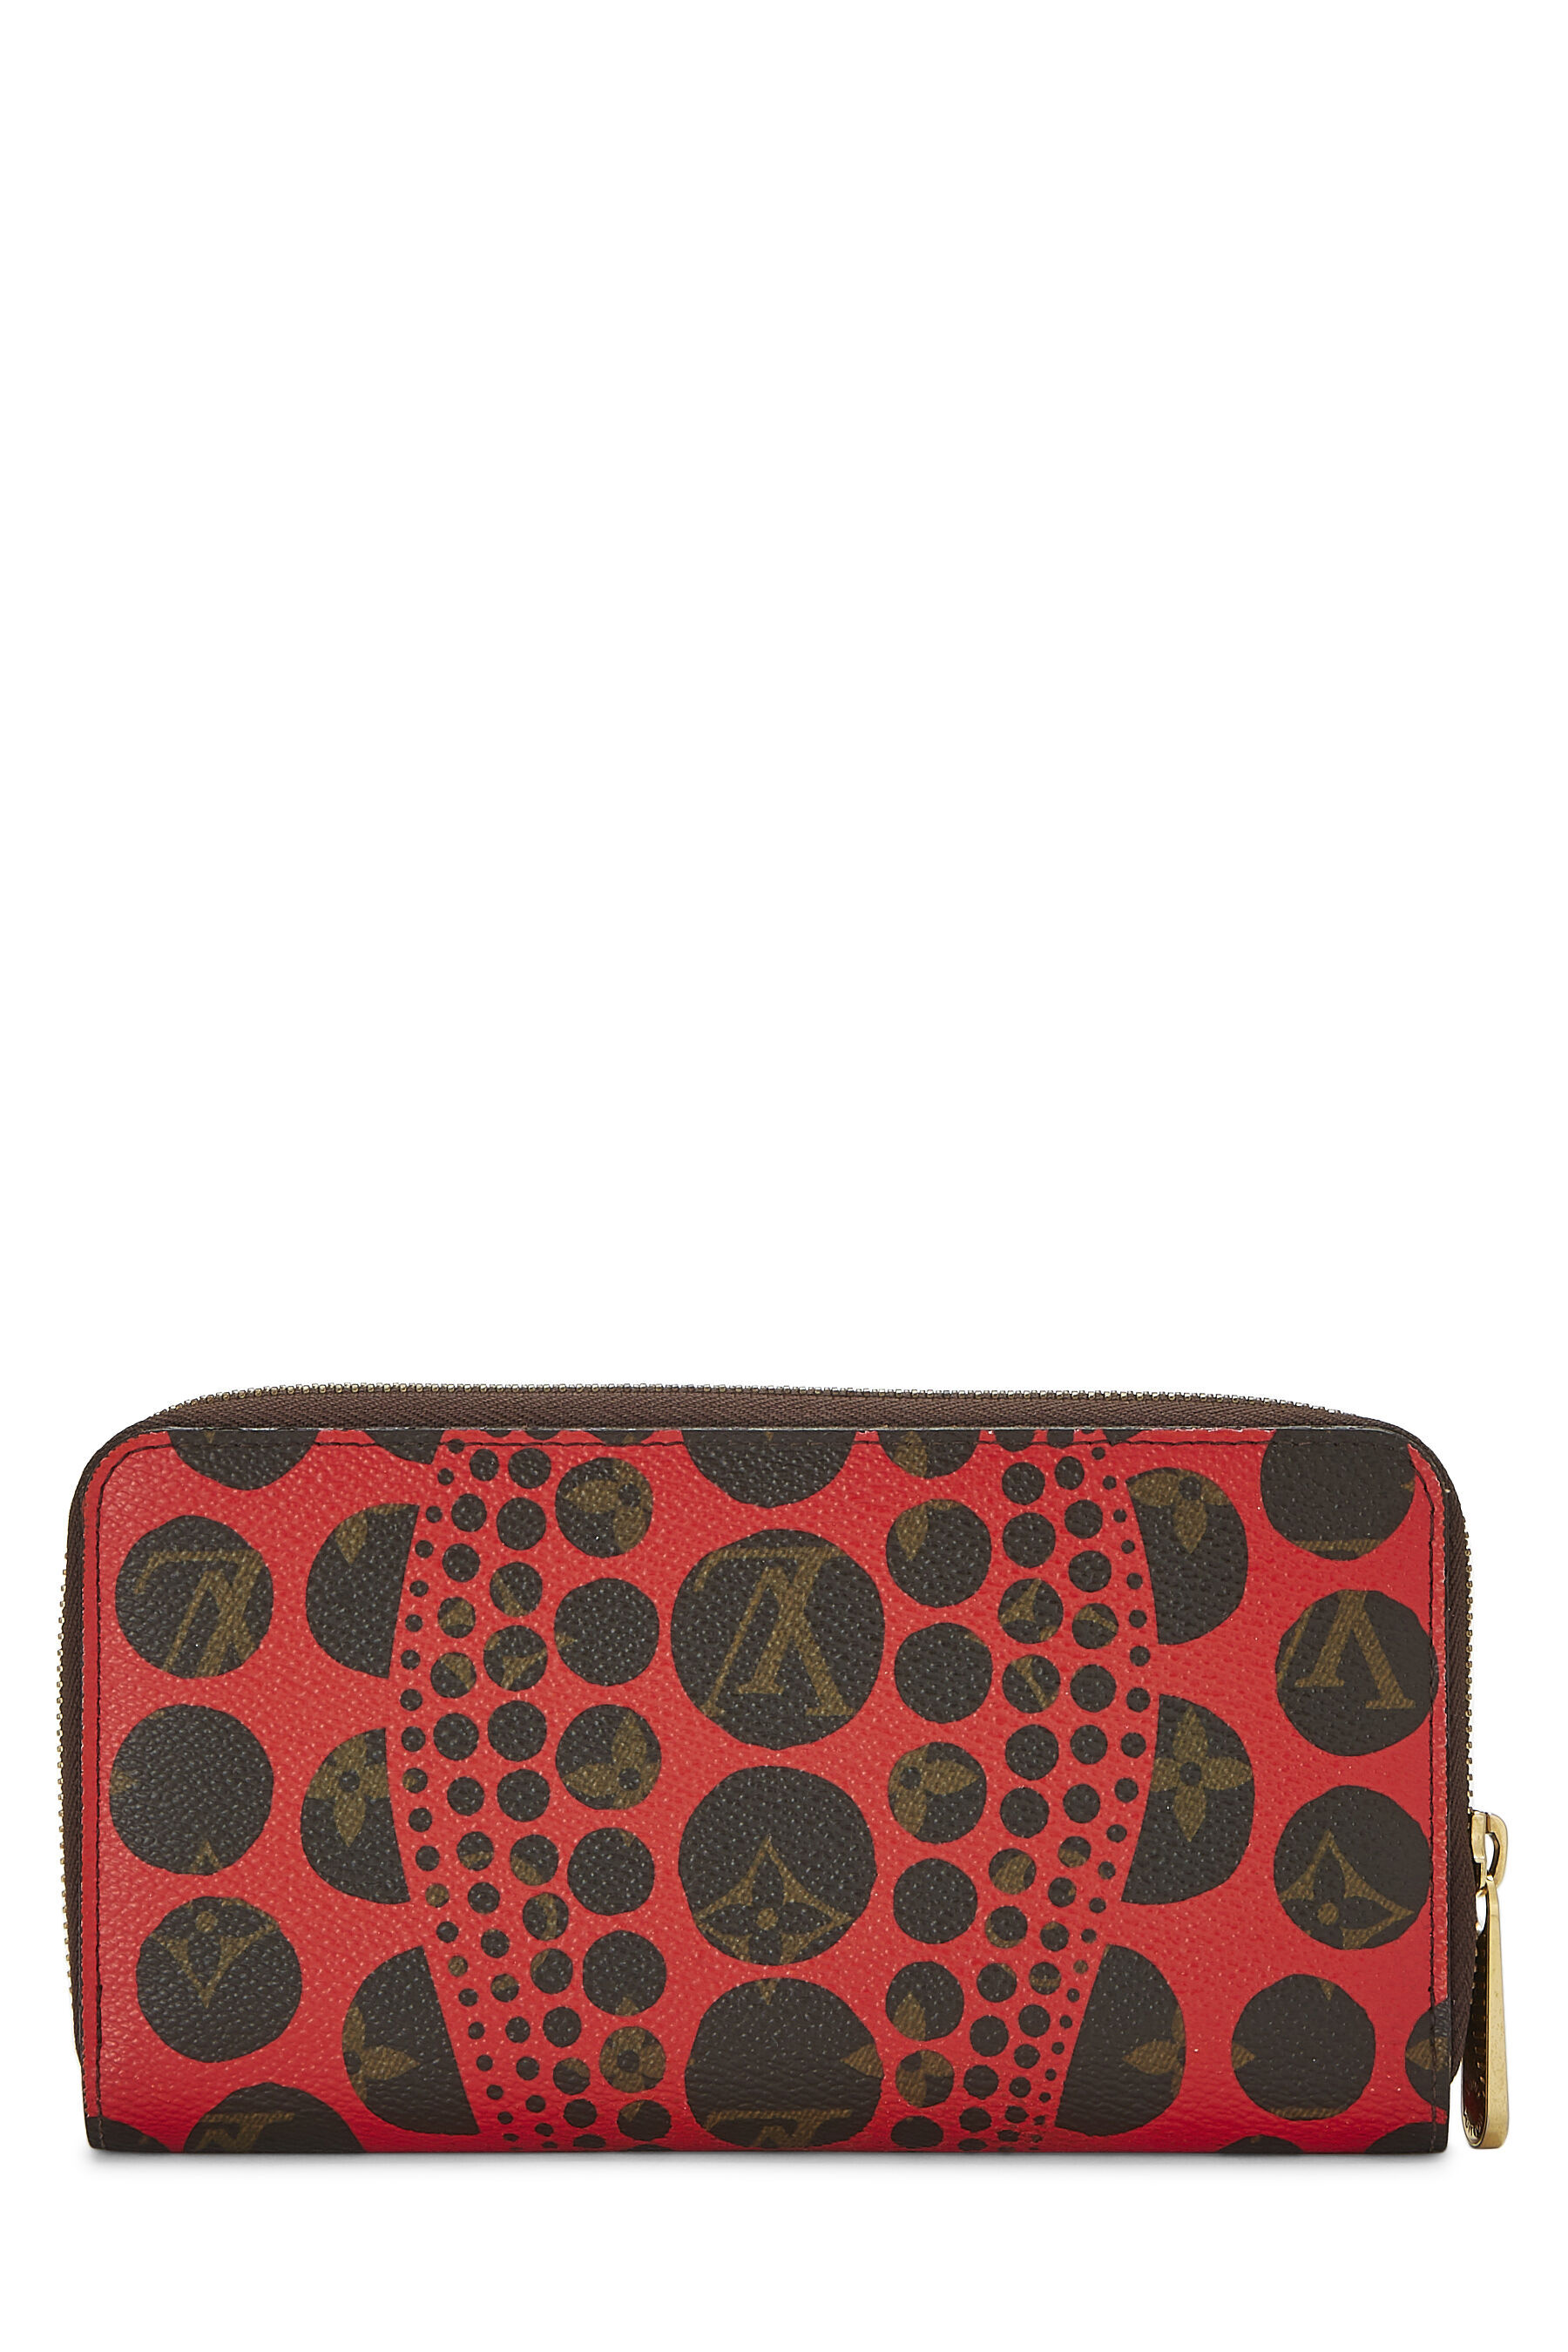 Yayoi Kusama x Louis Vuitton Red Monogram Pumpkin Dots Zippy Wallet